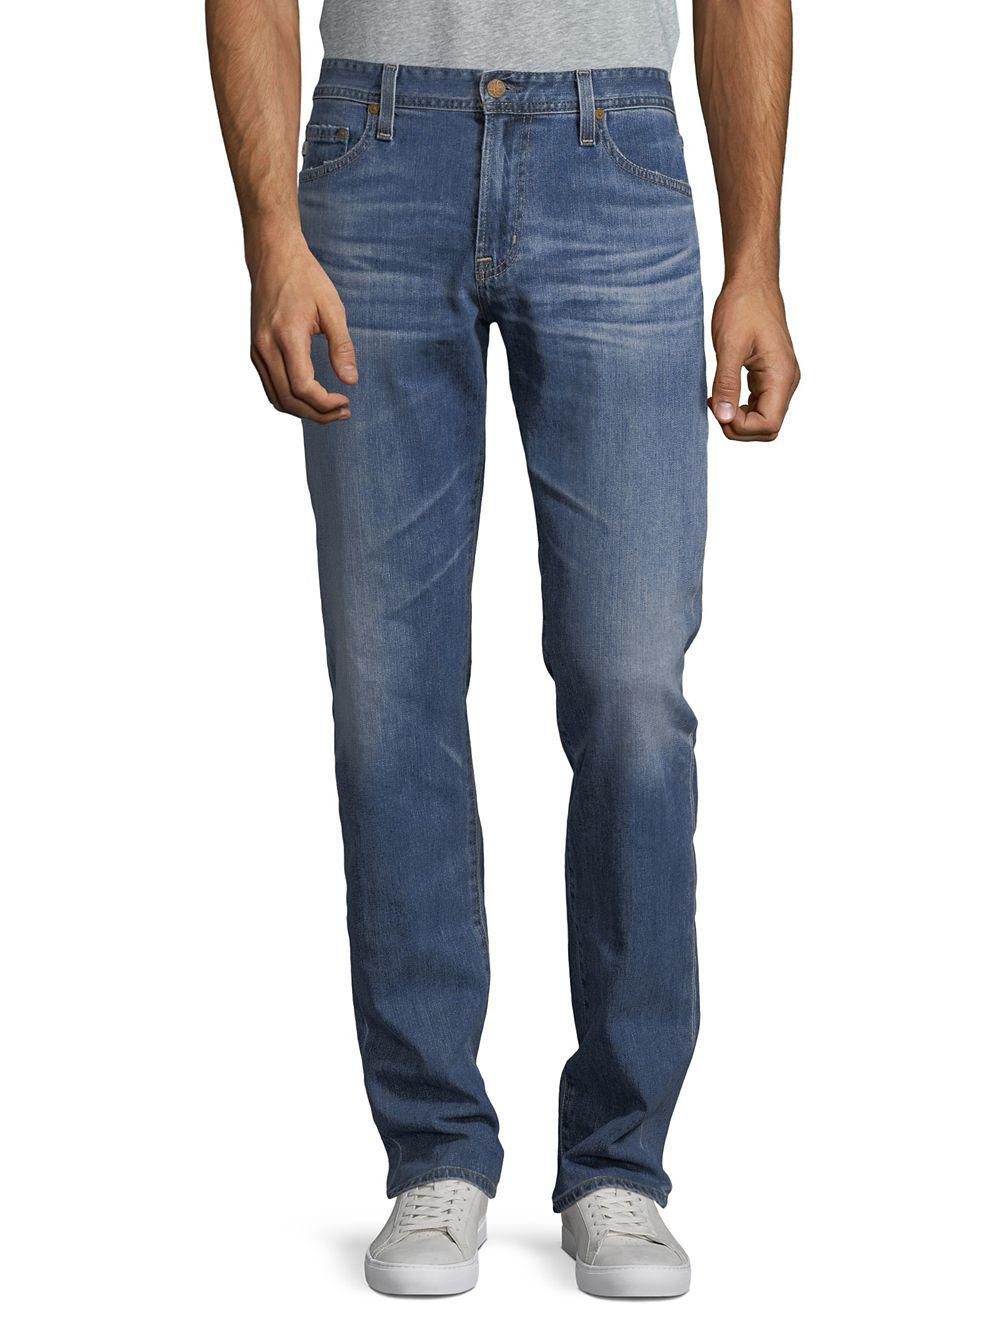 AG Jeans Cotton-blend Faded Denim Pants in Blue for Men - Lyst